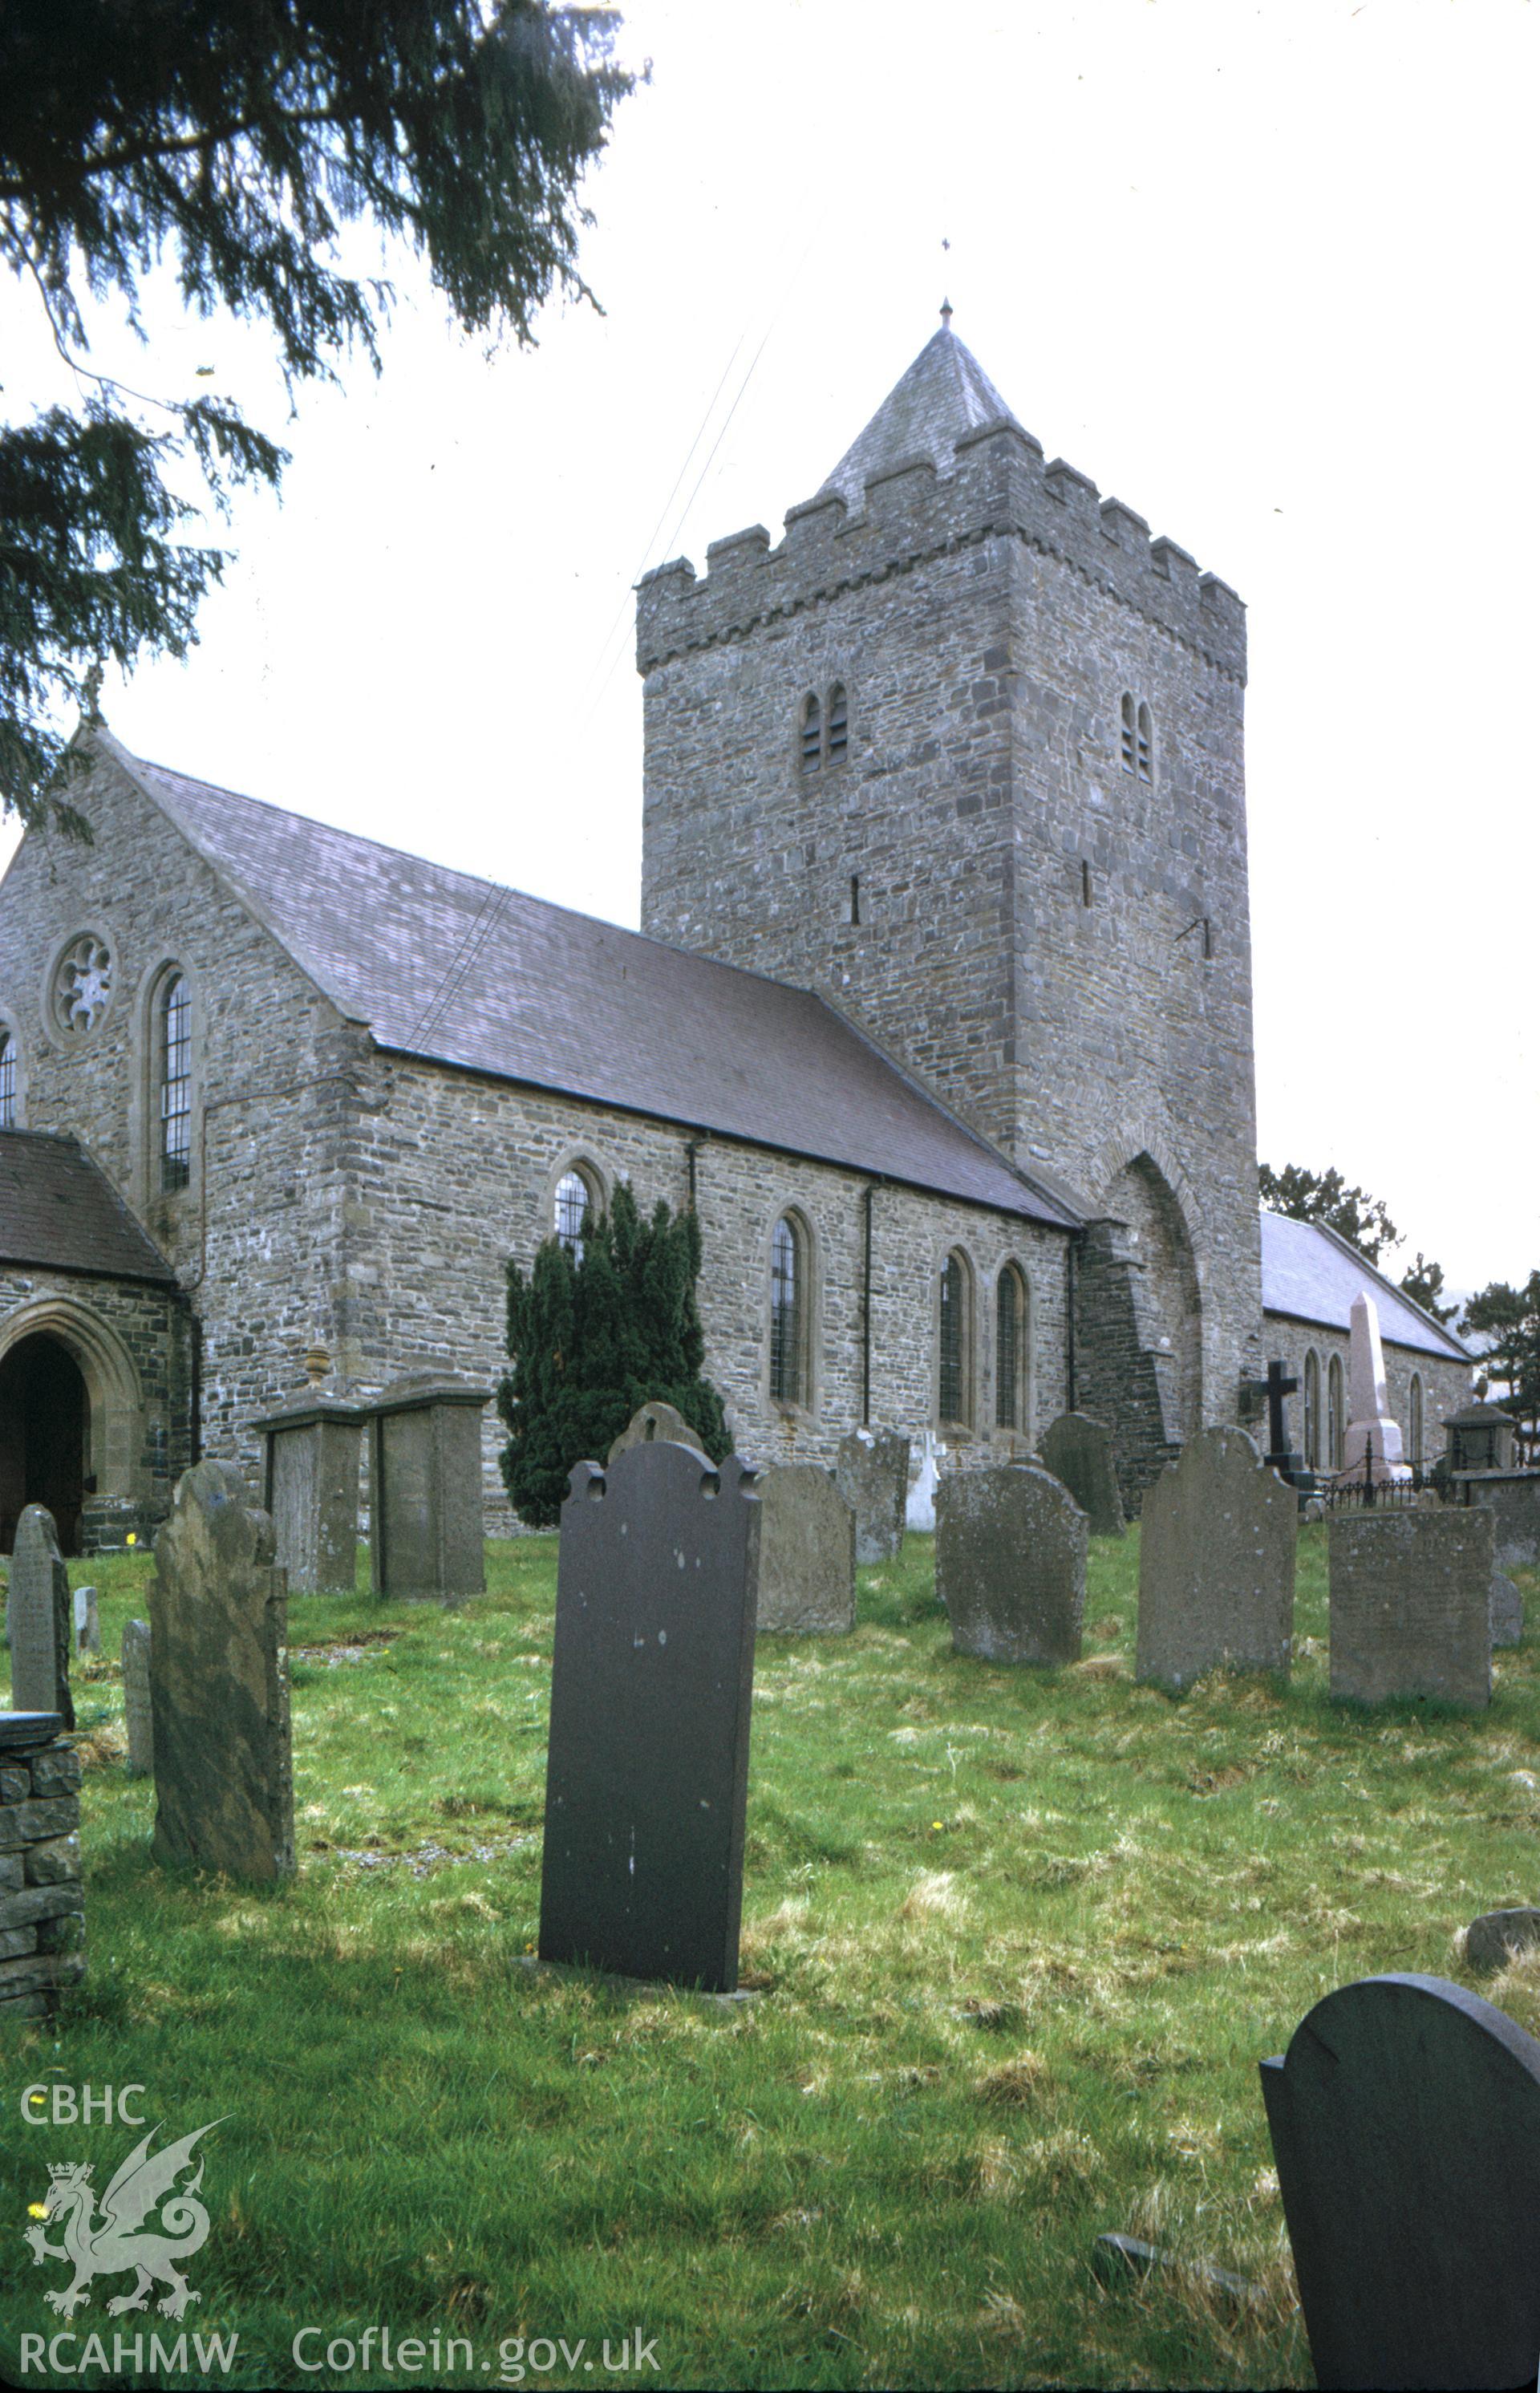 Colour slide showing exterior view of Llanddewi Brefi Church.